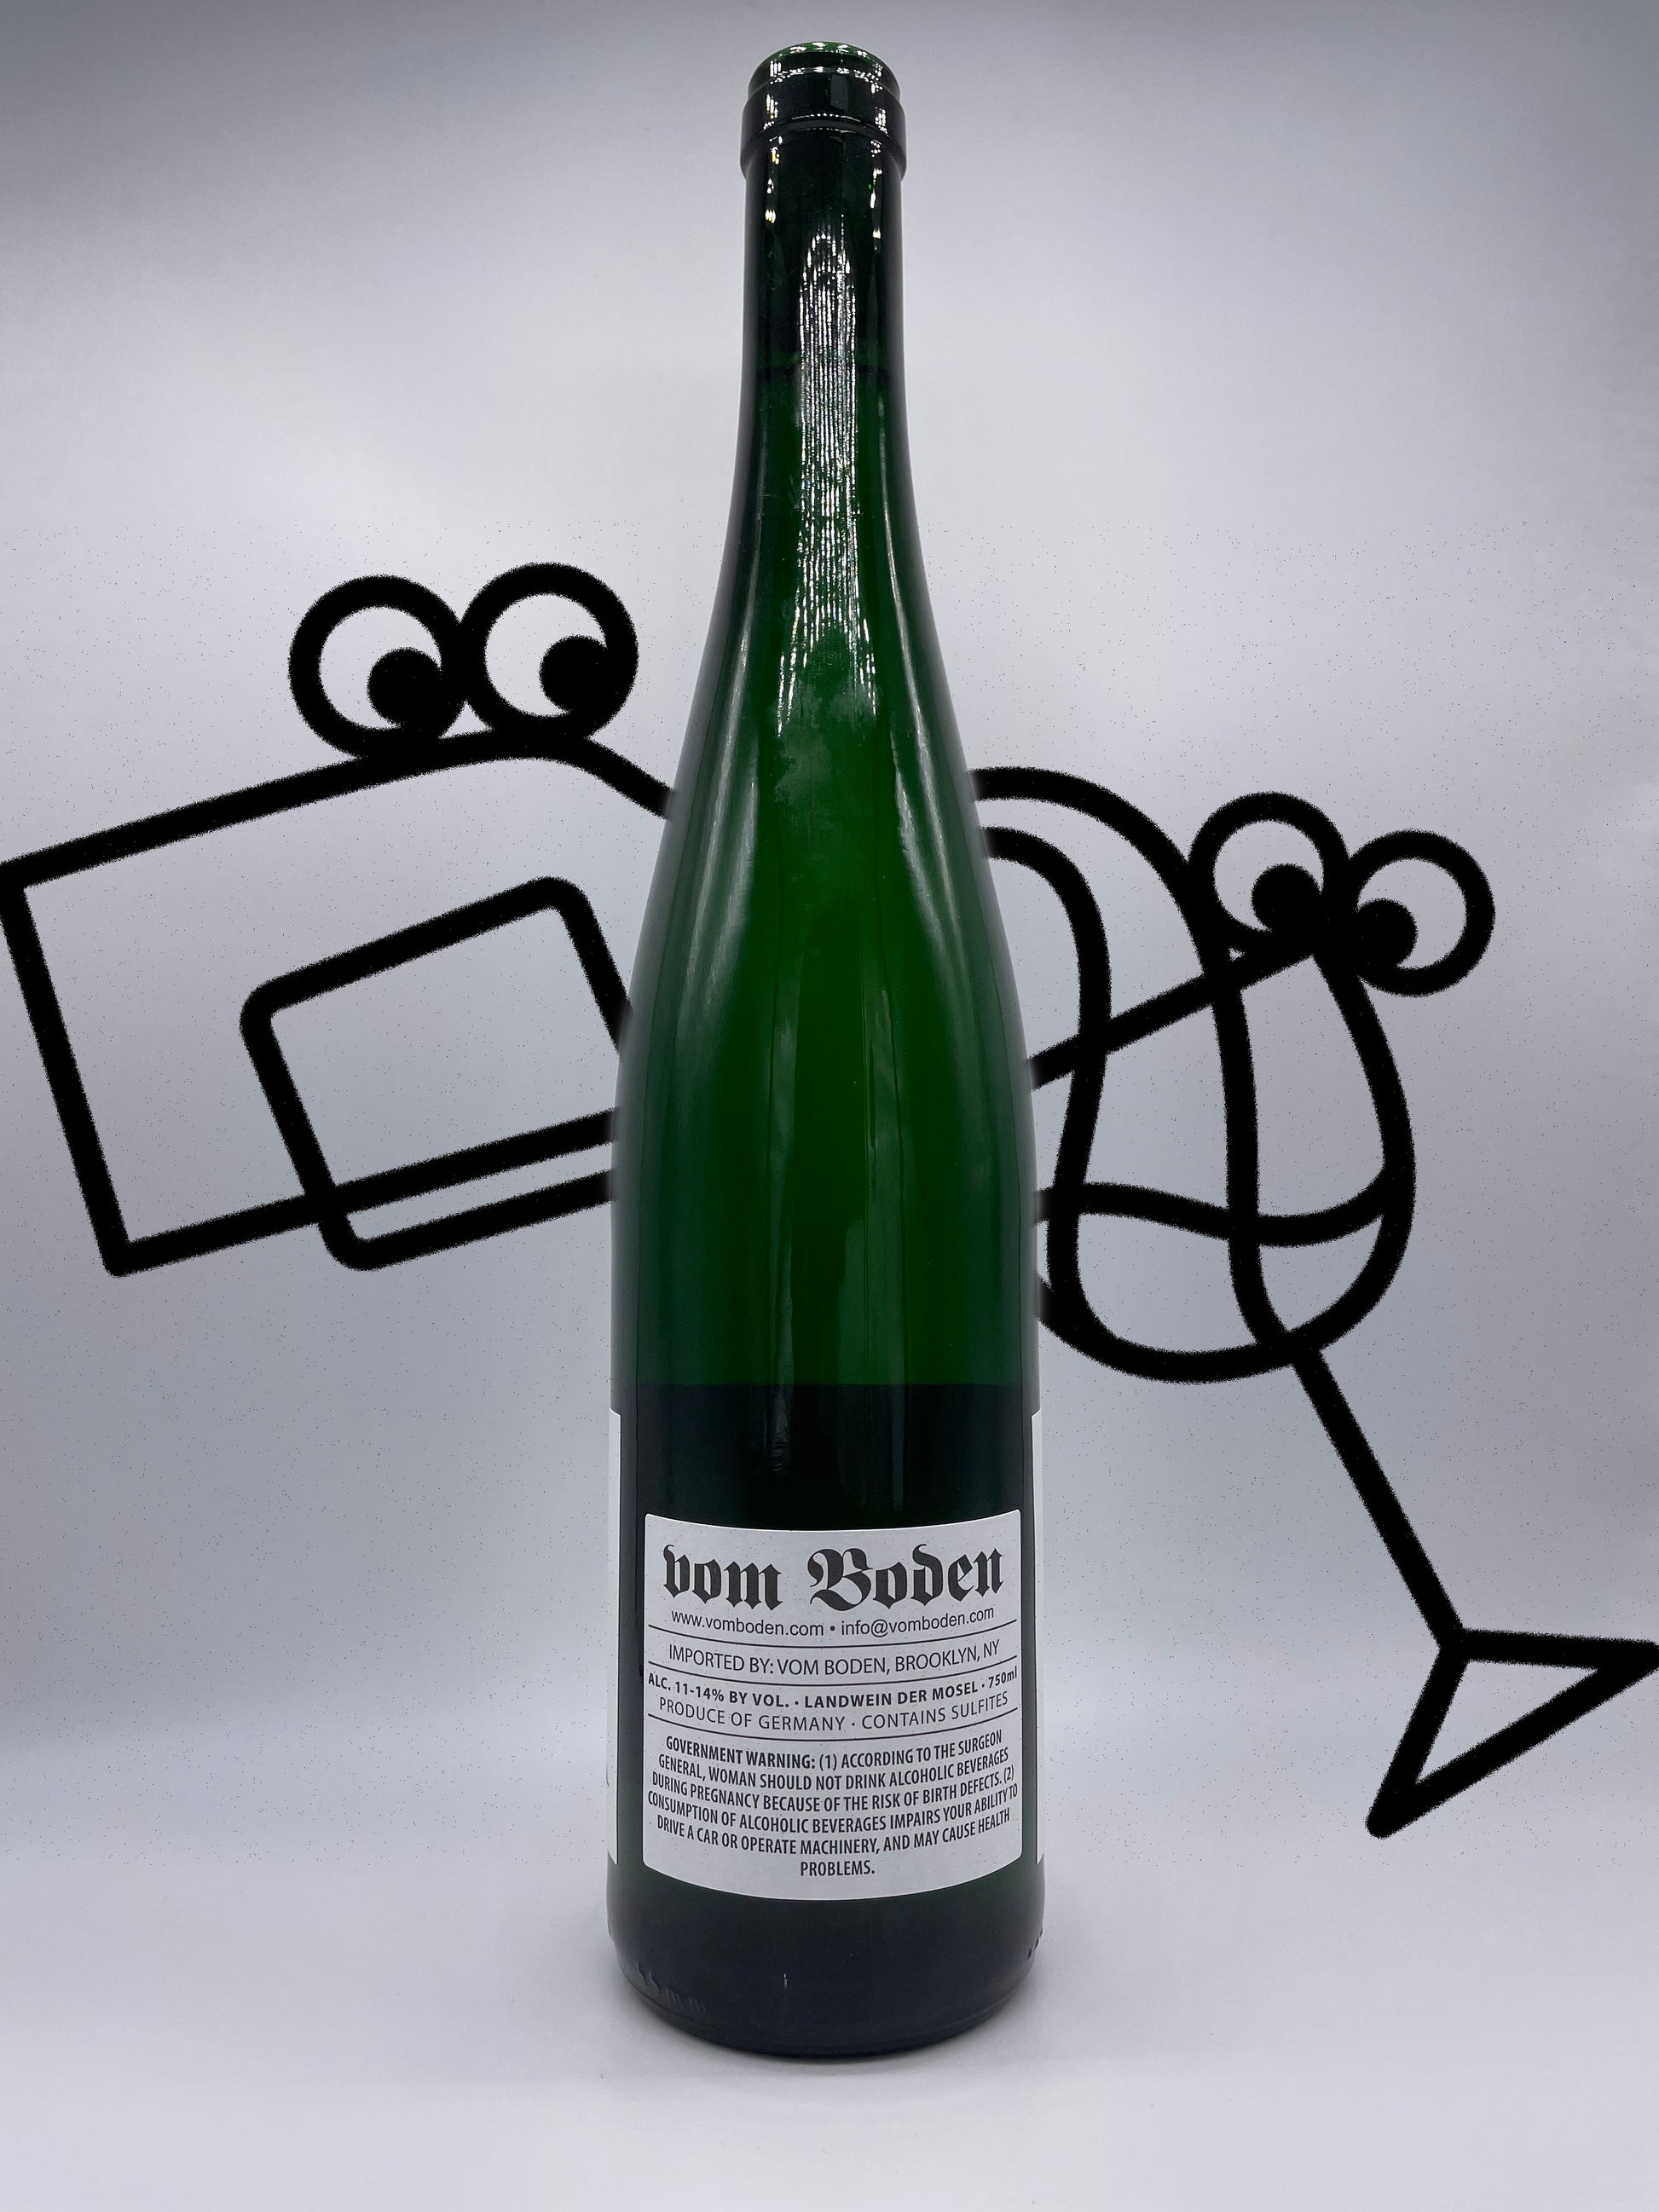 Lardot Riesling 'der Graf' Mosel, Germany - Williston Park Wines & Spirits